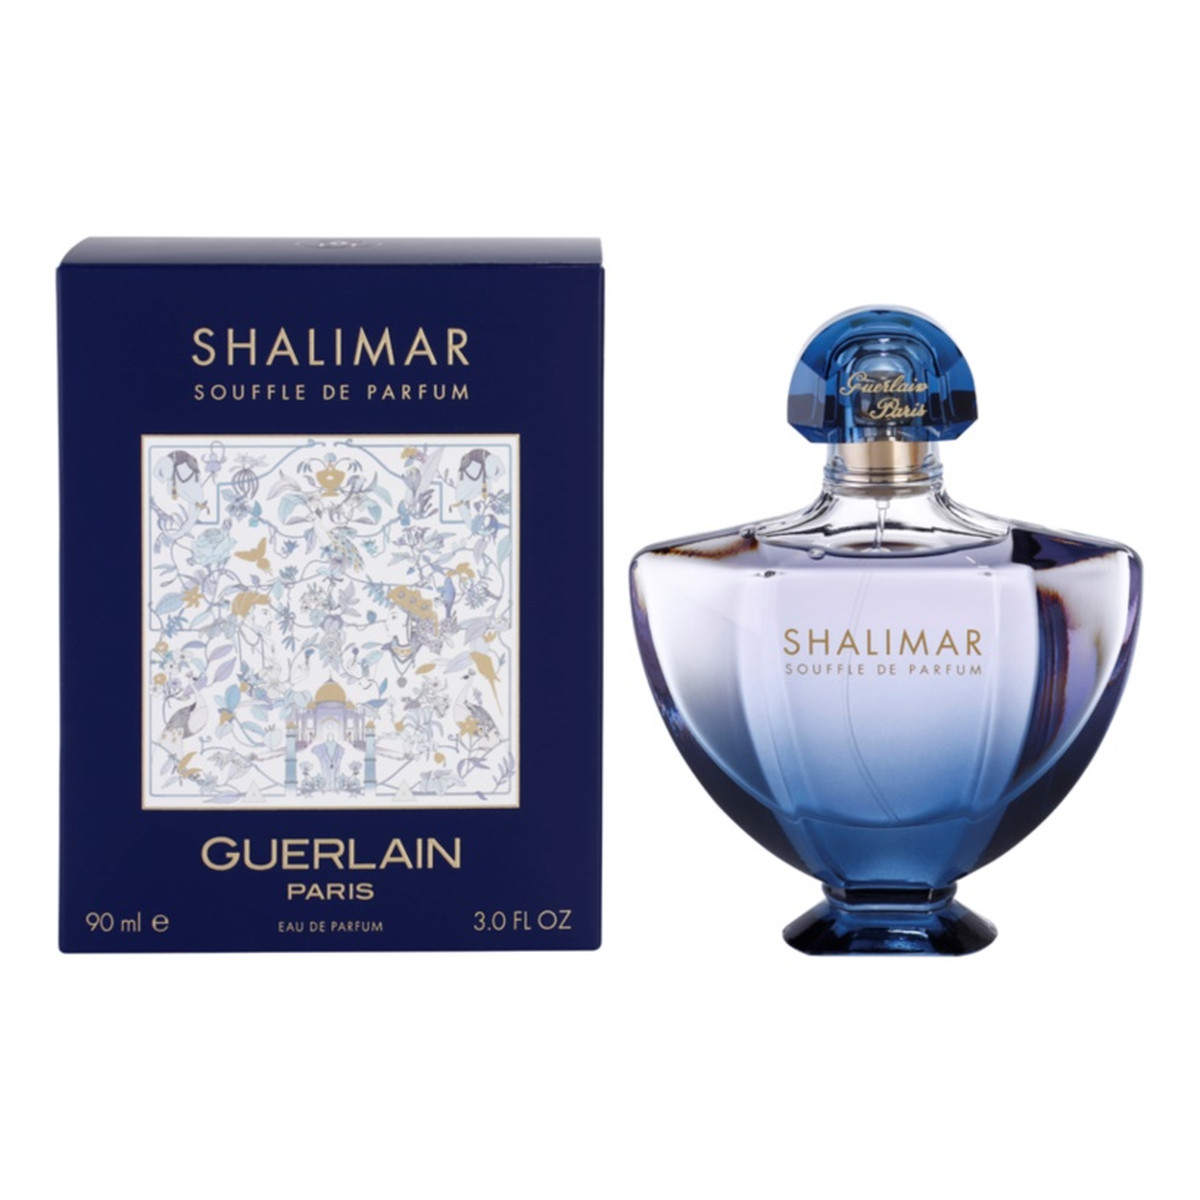 Guerlain Shalimar Souffle de Parfum woda perfumowana 90ml